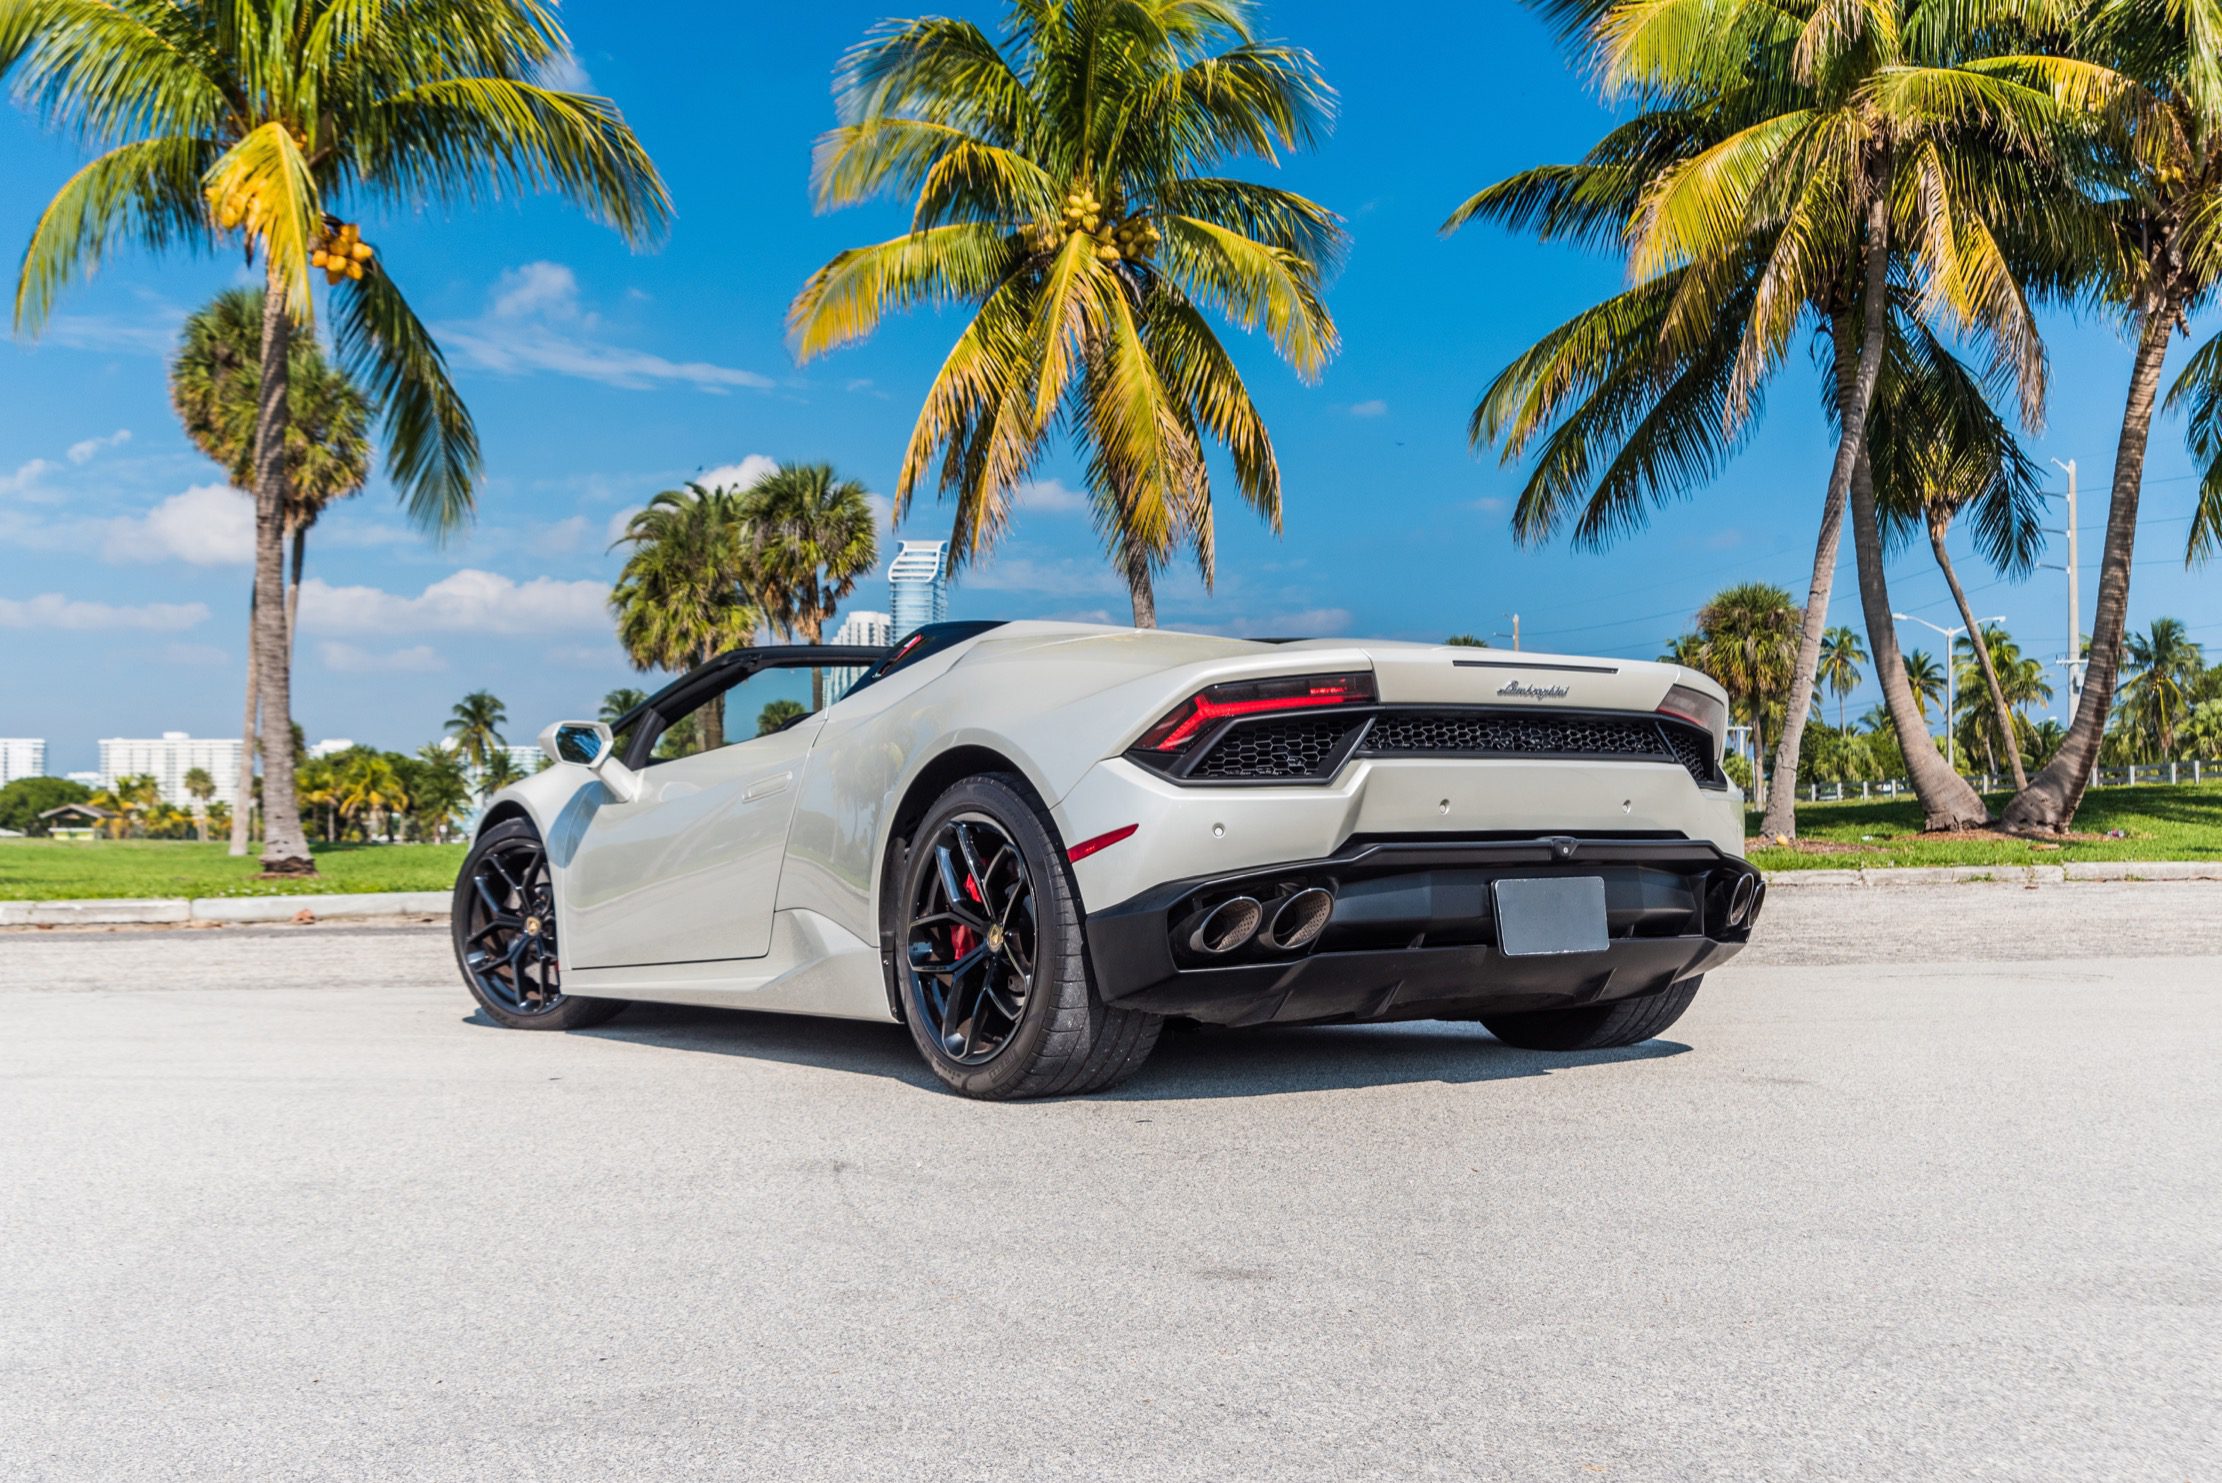 Lamborghini-Huracan-Spyder-Rental-Miami-00014.jpg